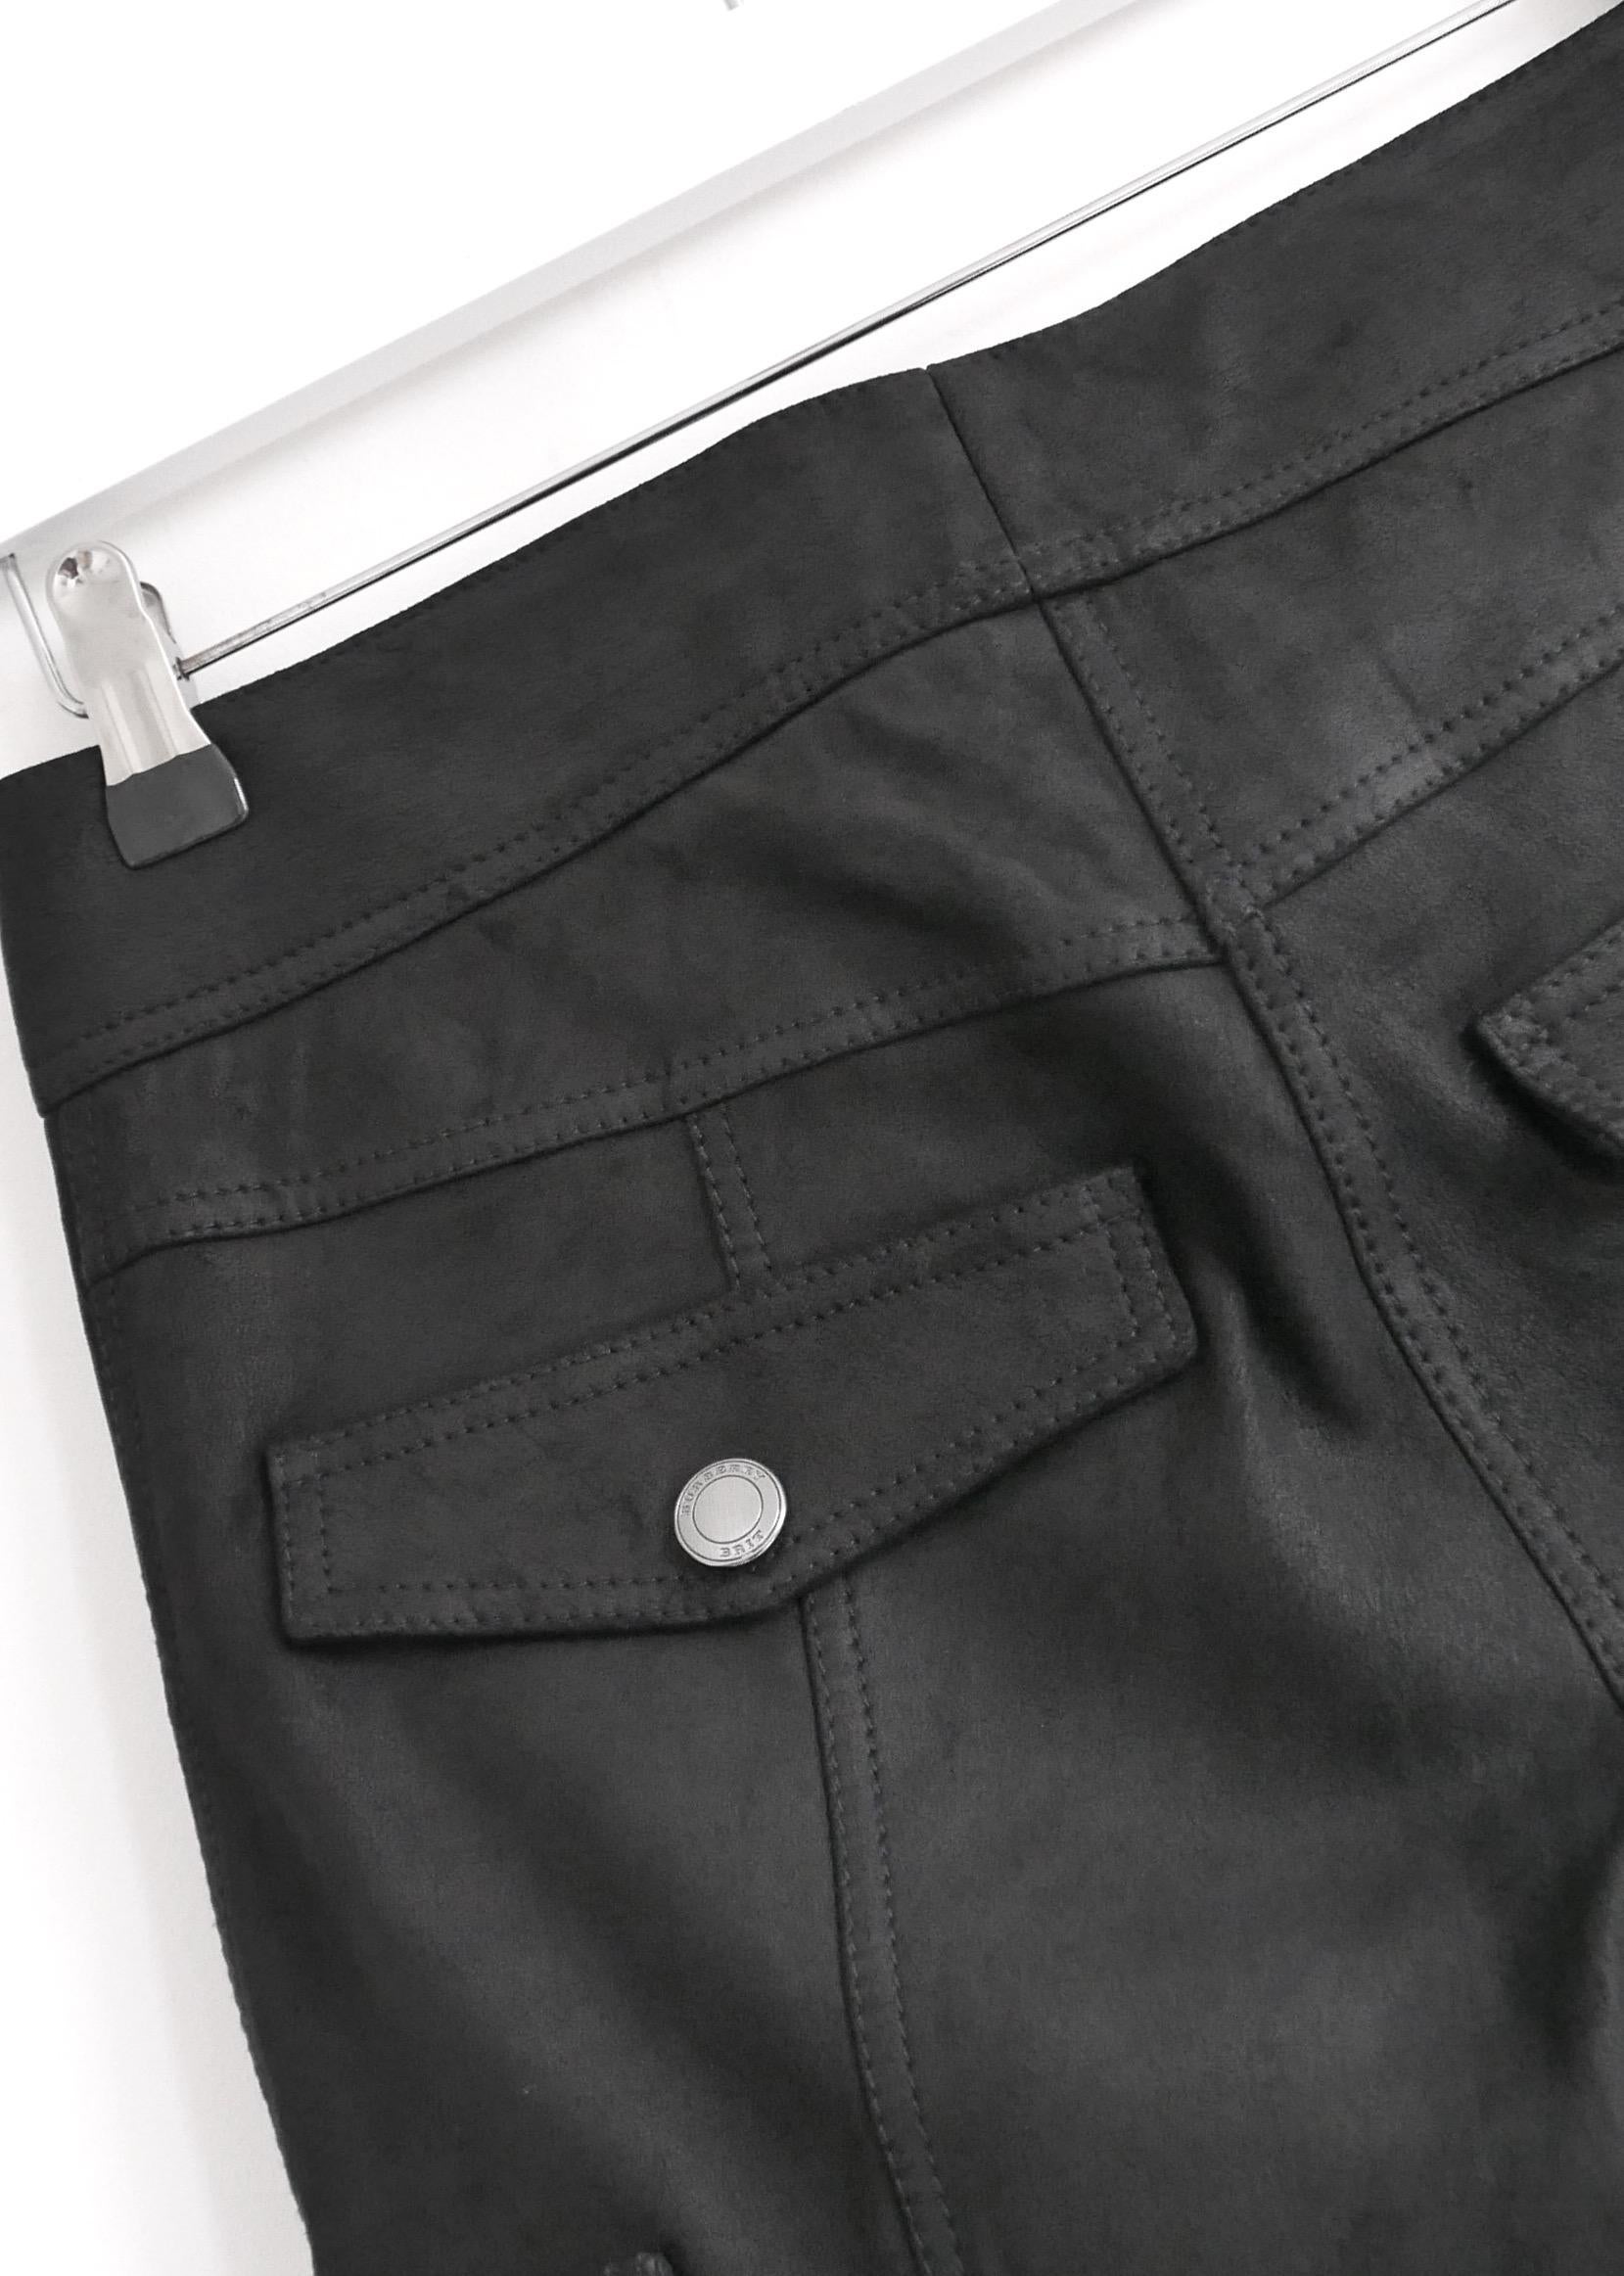 Burberry Brit Black Leather Moto Pants For Sale 1